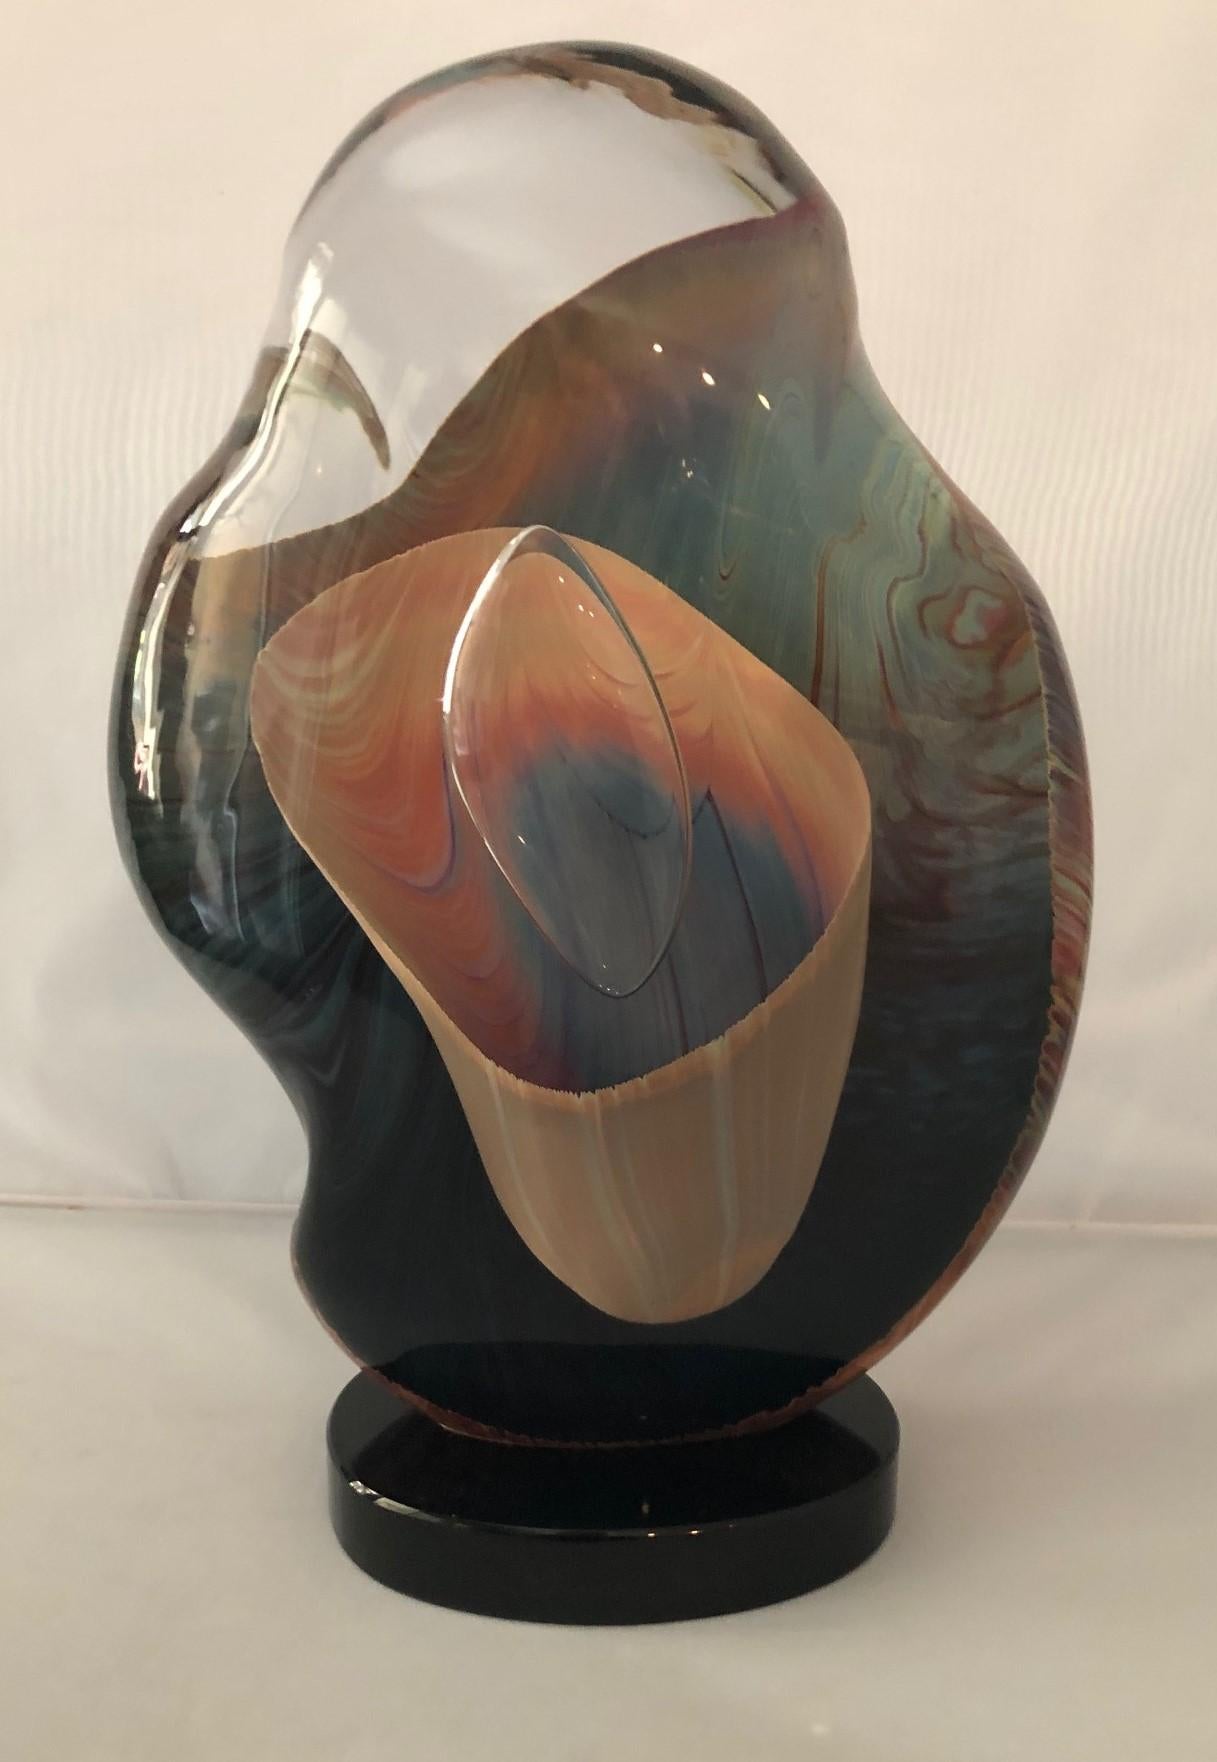 An absolutely stunning Calcedonia art glass biomorphic / 